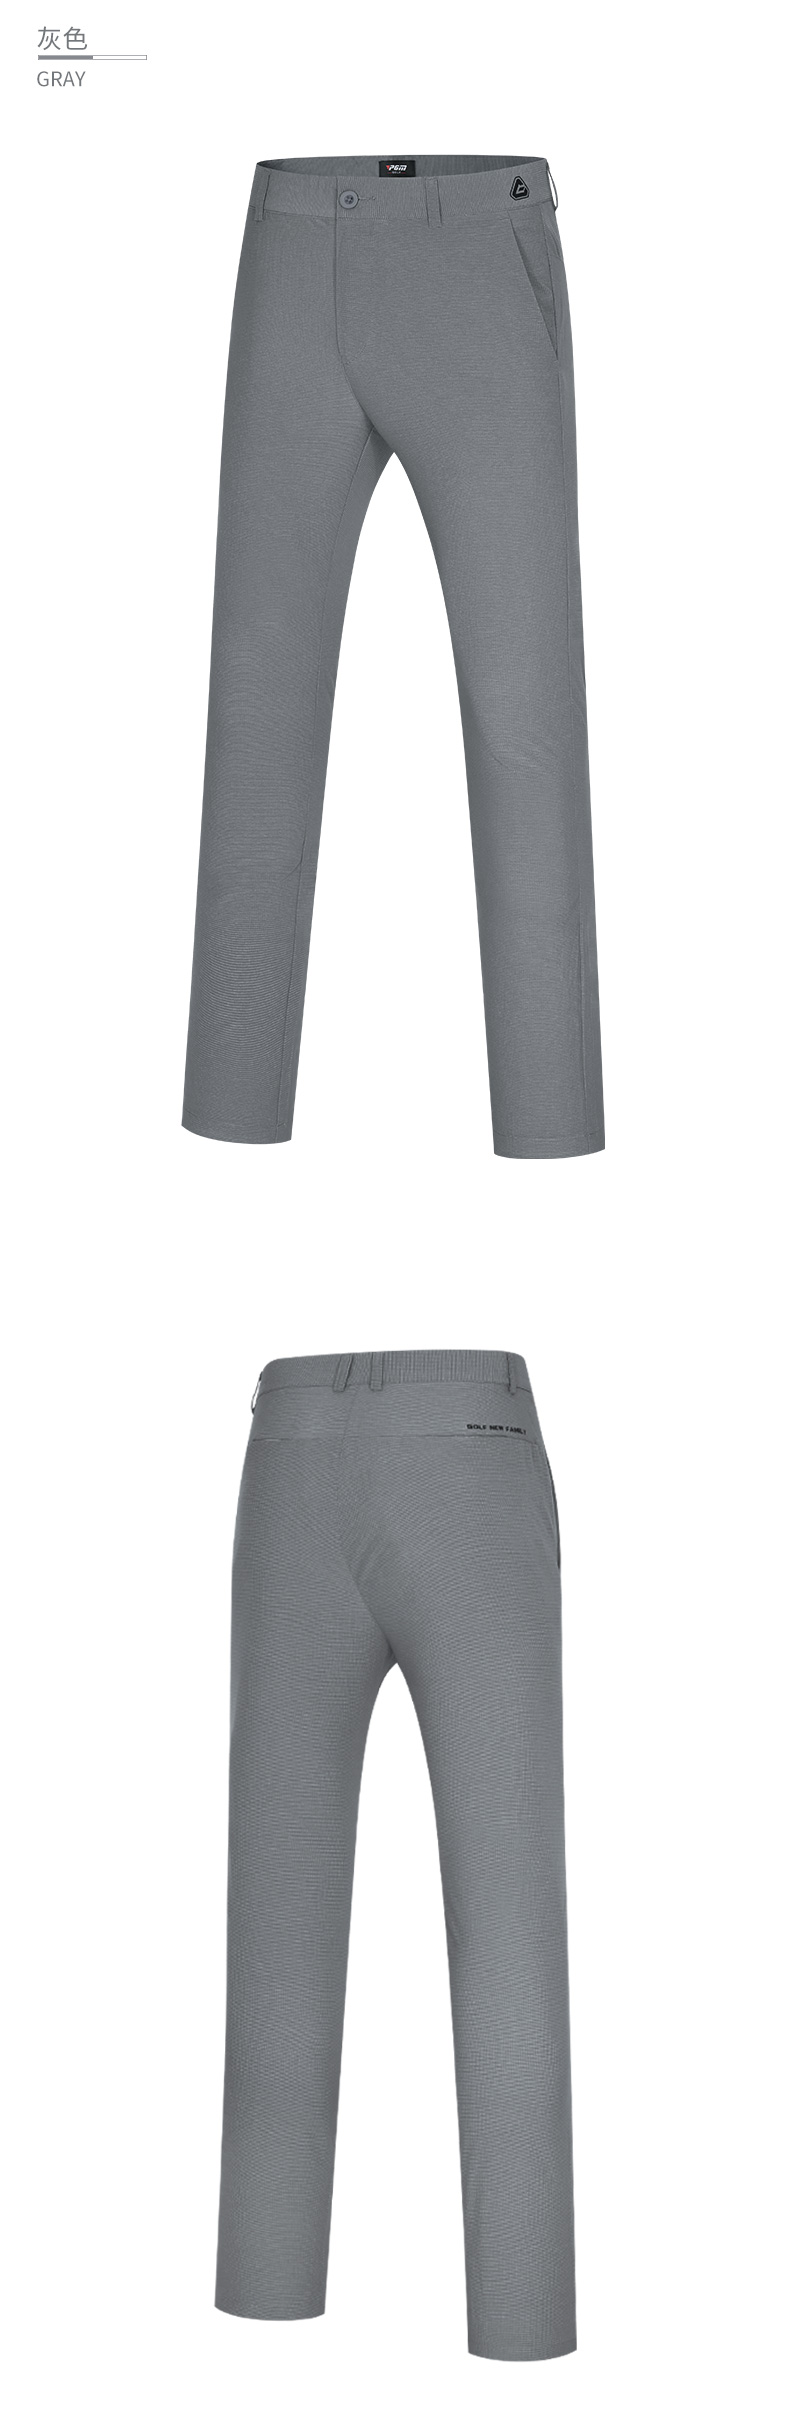 PGM 2021款 高尔夫裤子男装夏季长裤休闲运动球裤golf薄款男裤